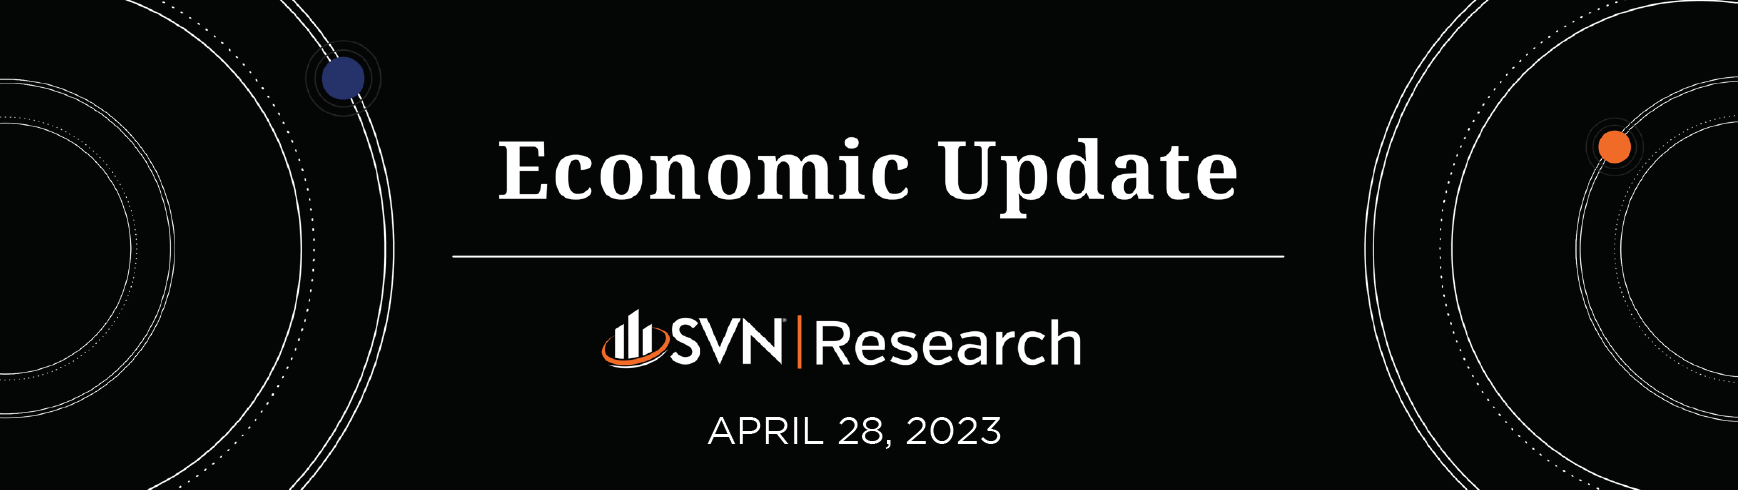 SVN | Research Economic Update 04.28.2023